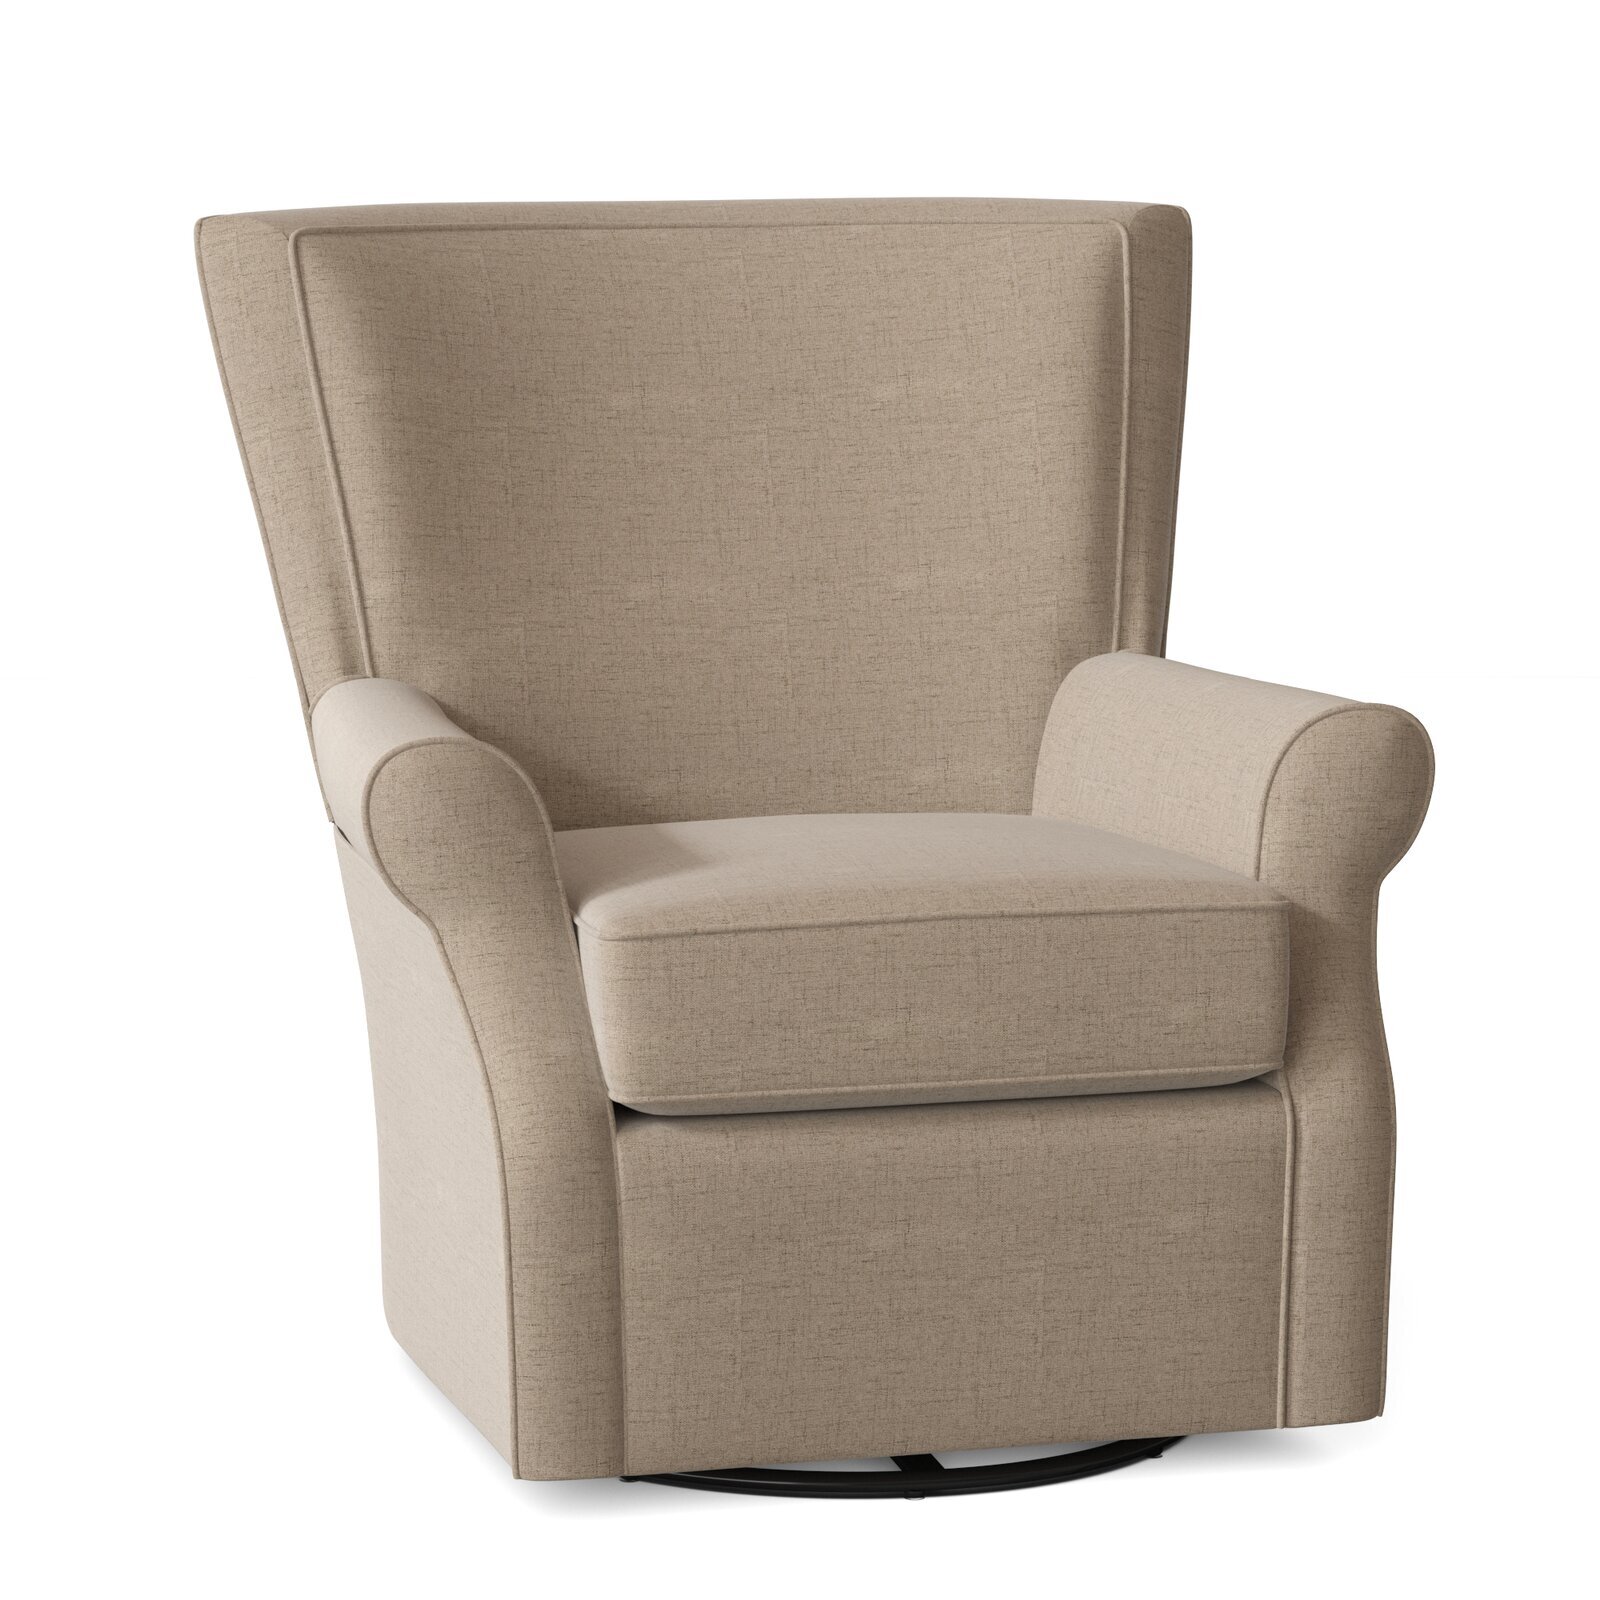 A mid century modern giant swivel chair